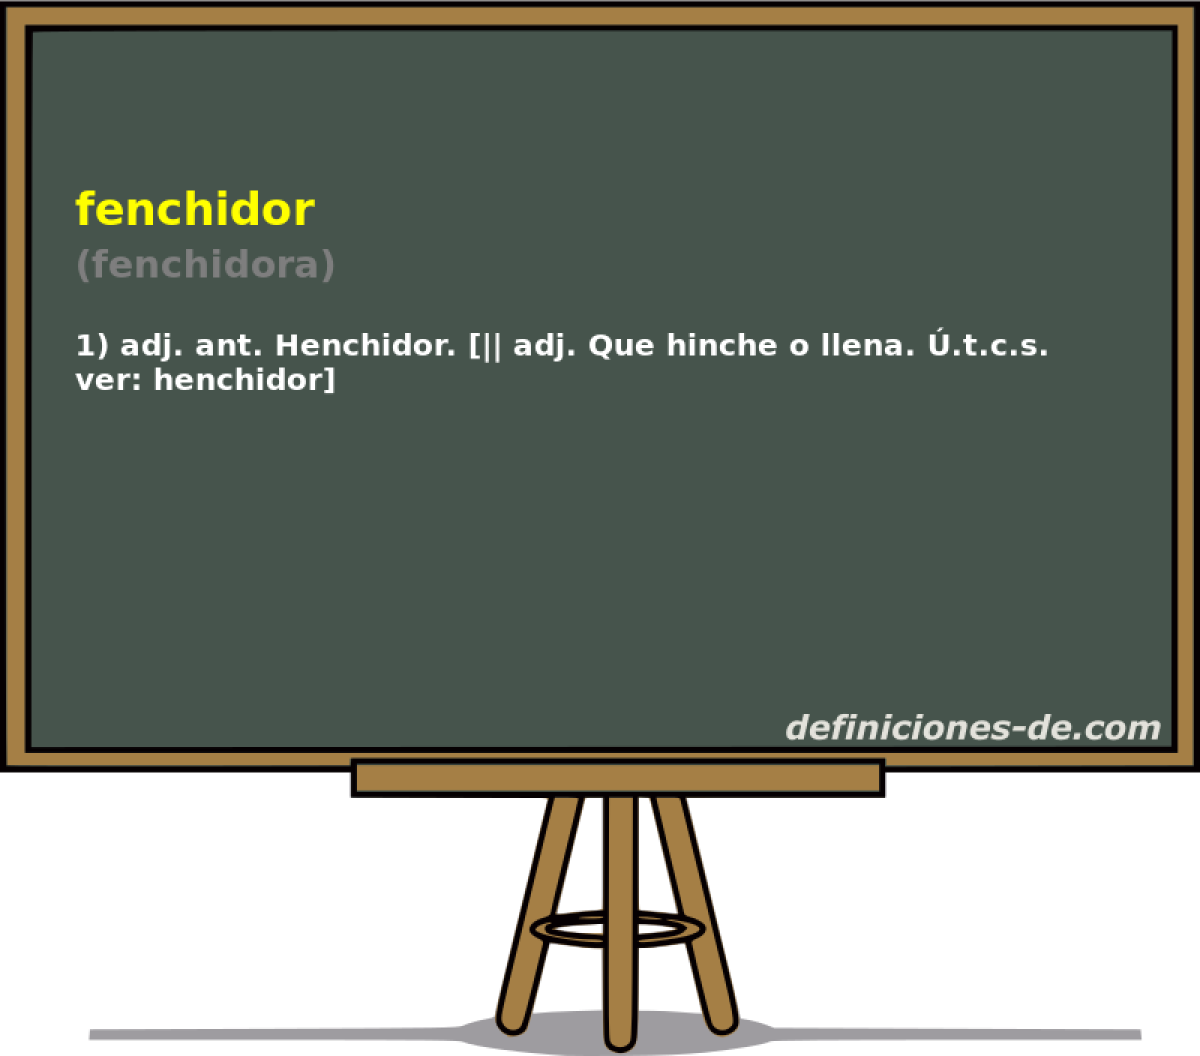 fenchidor (fenchidora)